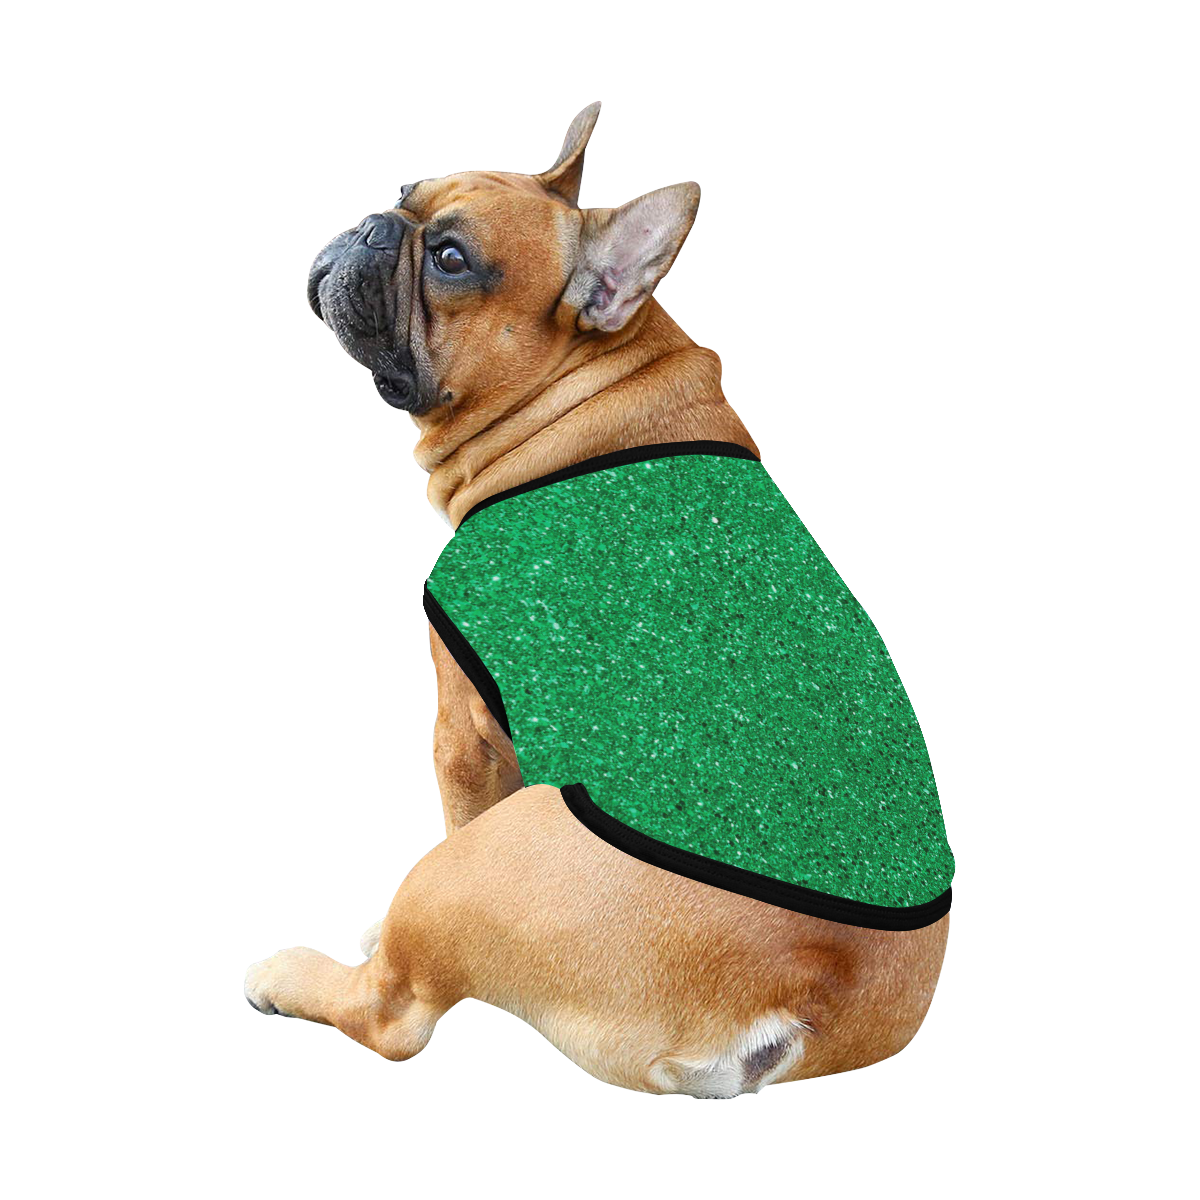 Green Glitter All Over Print Pet Tank Top